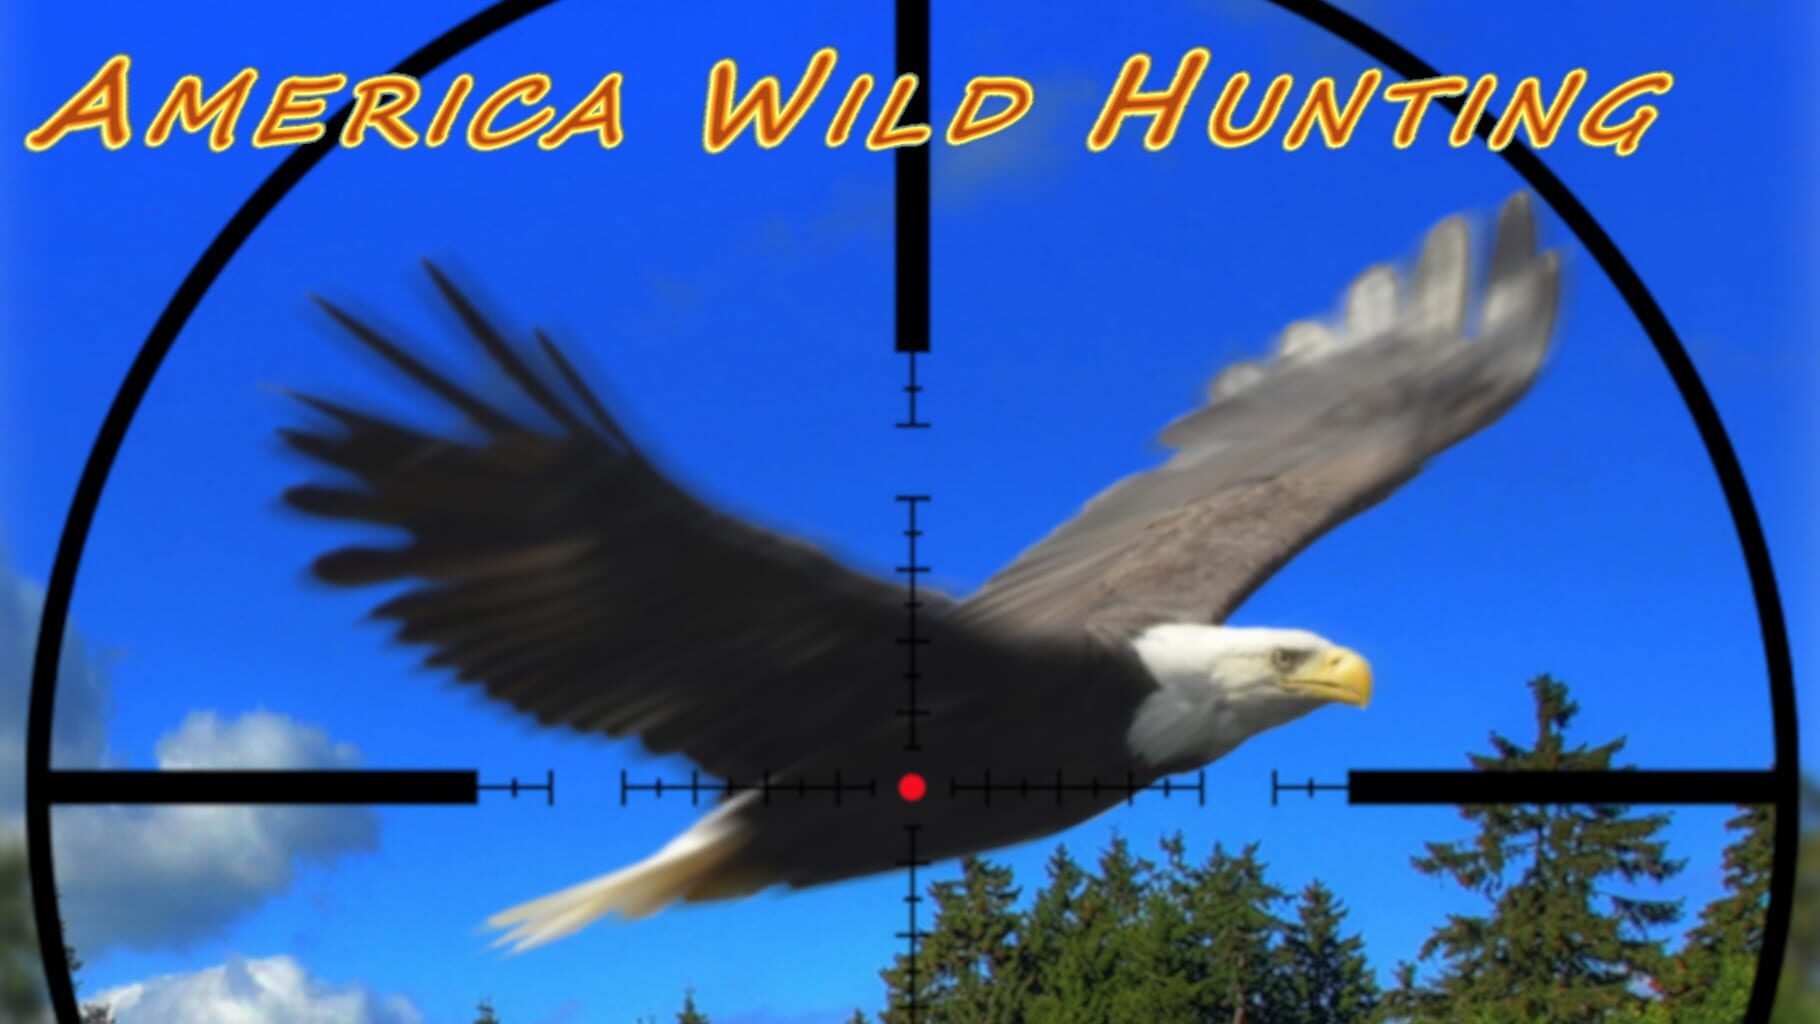 America Wild Hunting artwork